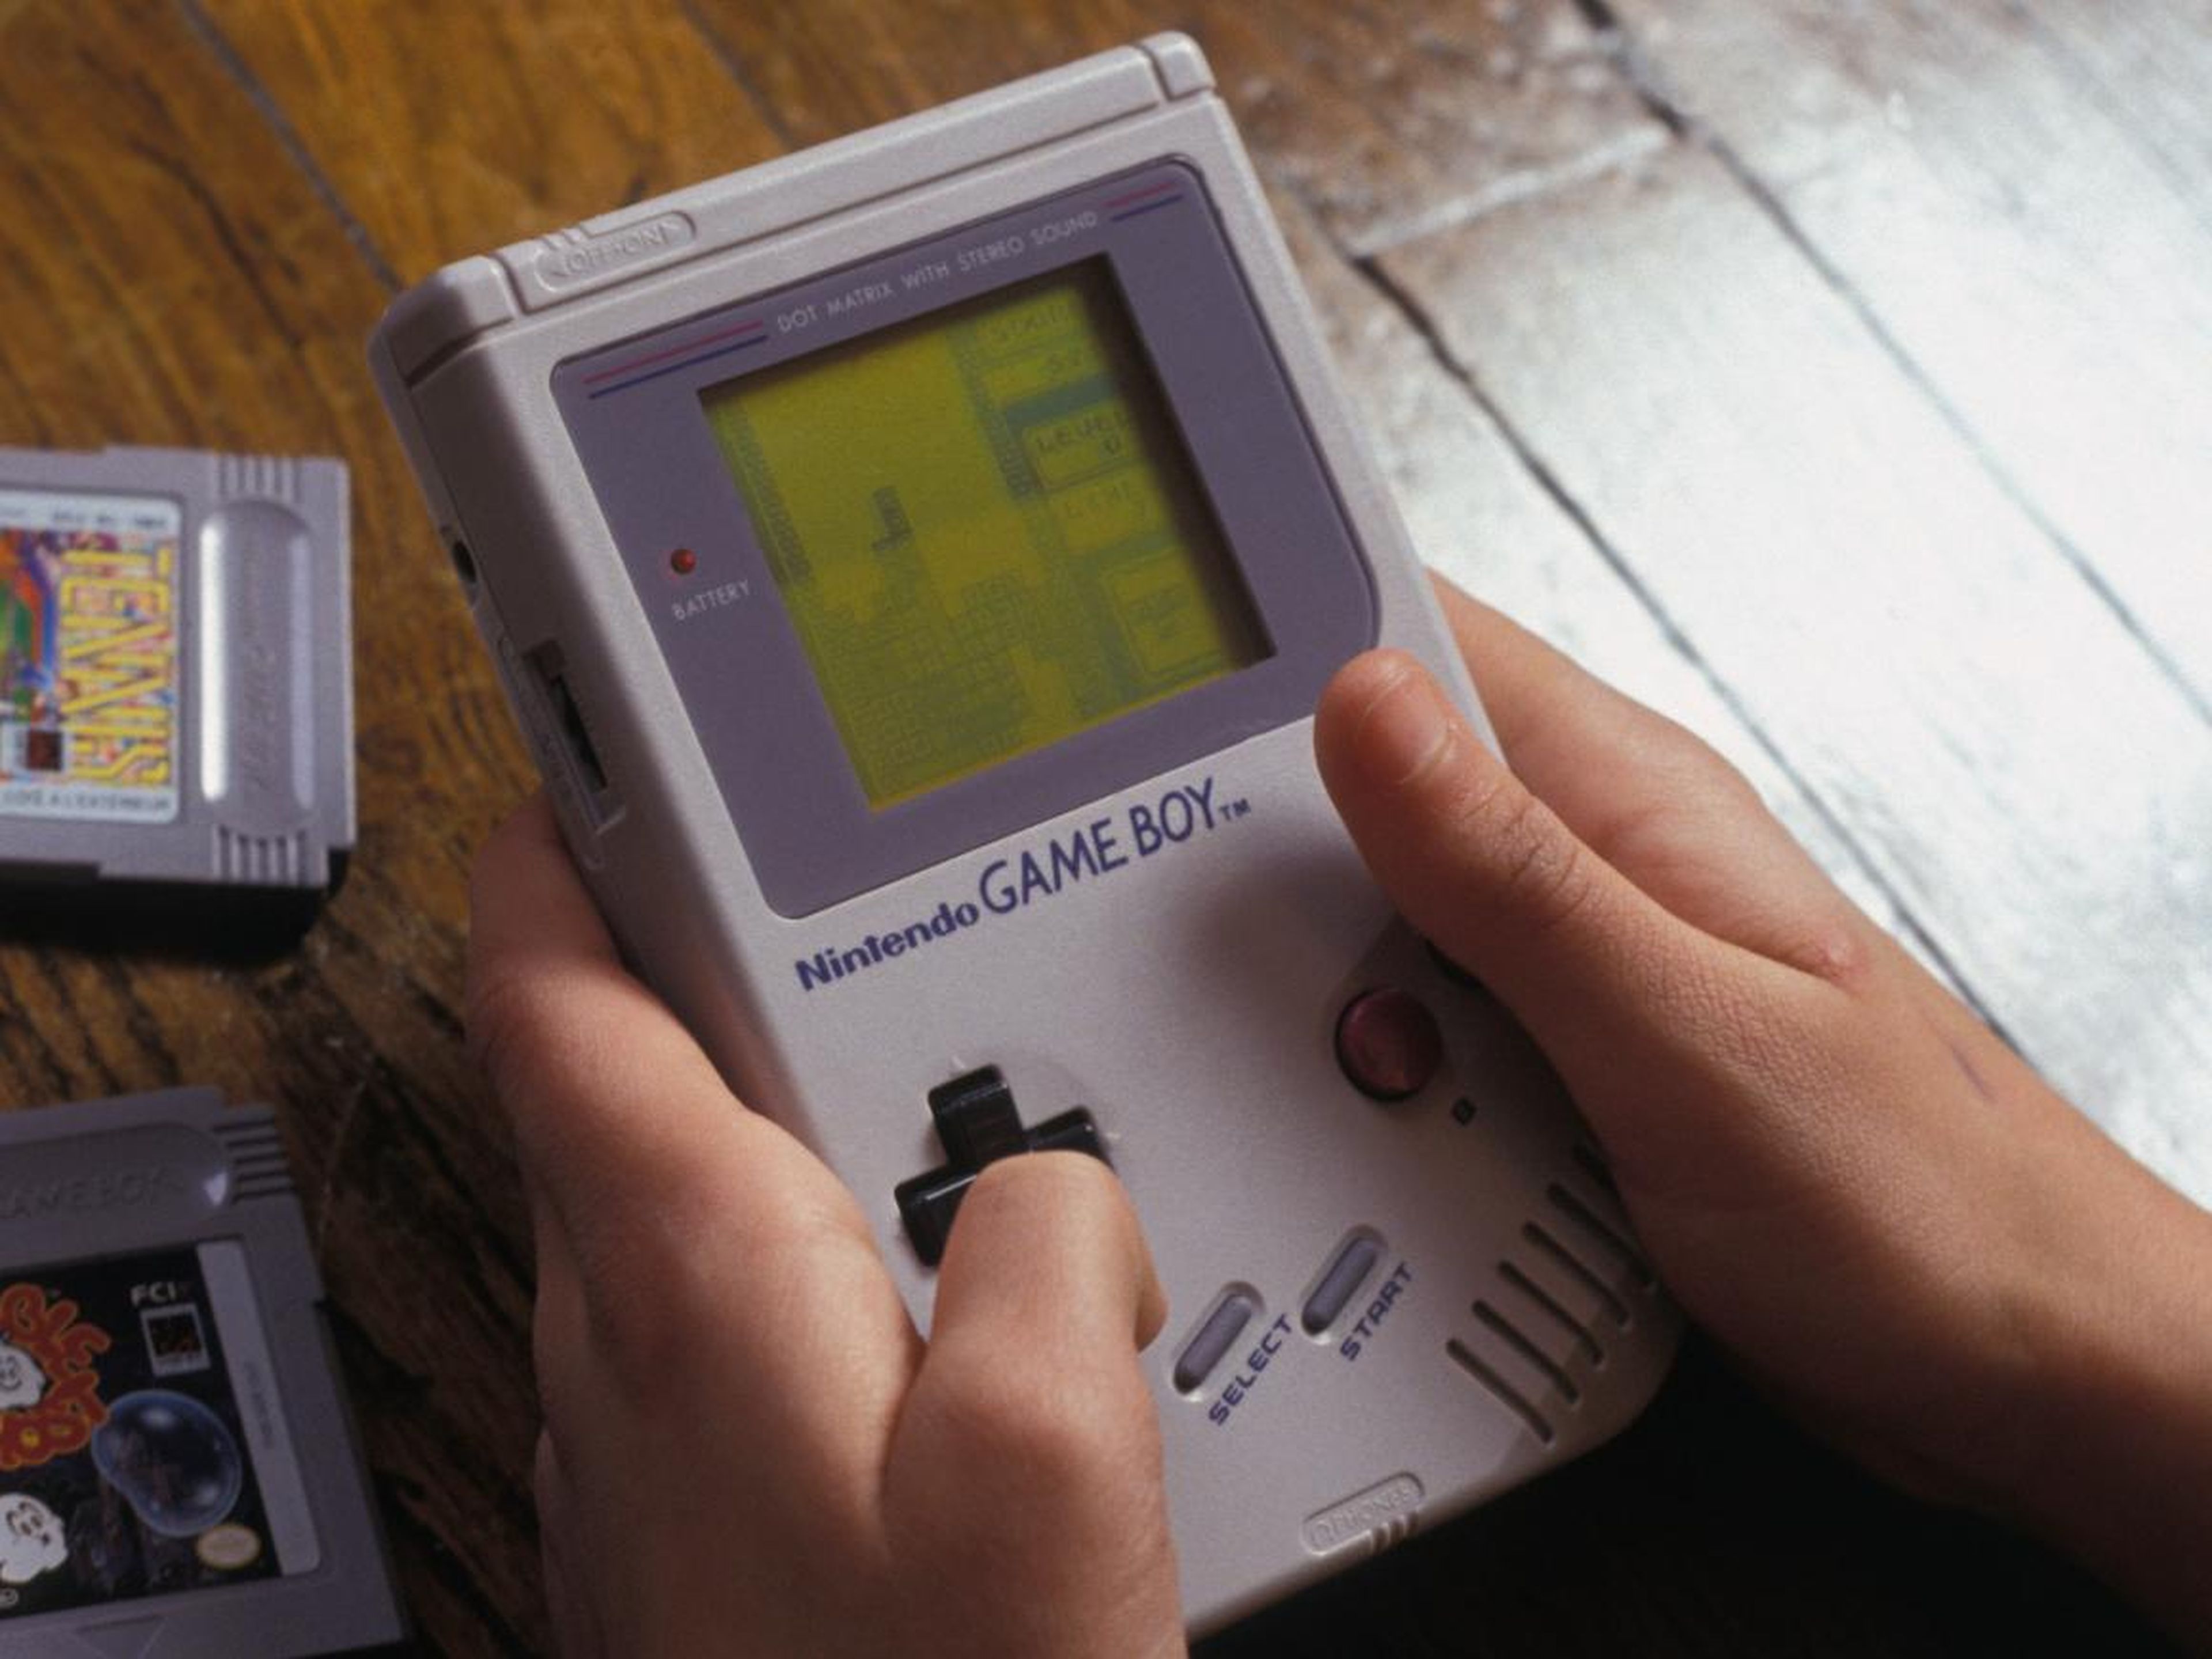 1989: Game Boy